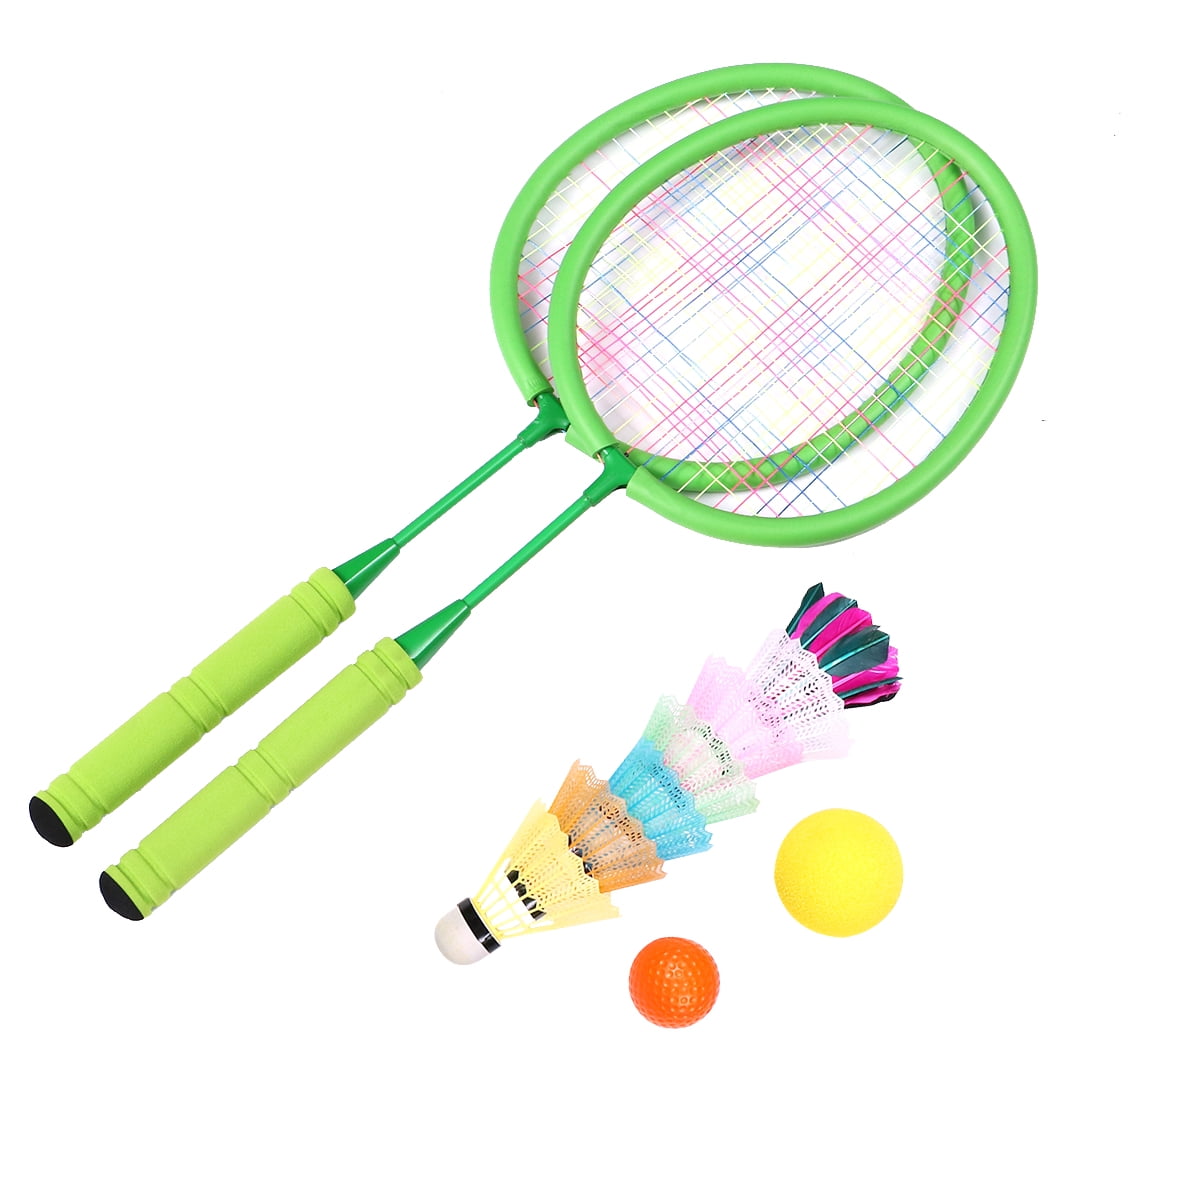 Carbon Shaft w/ Carry Bag Badminton Racket Set of 4 for Backyard Family Game 